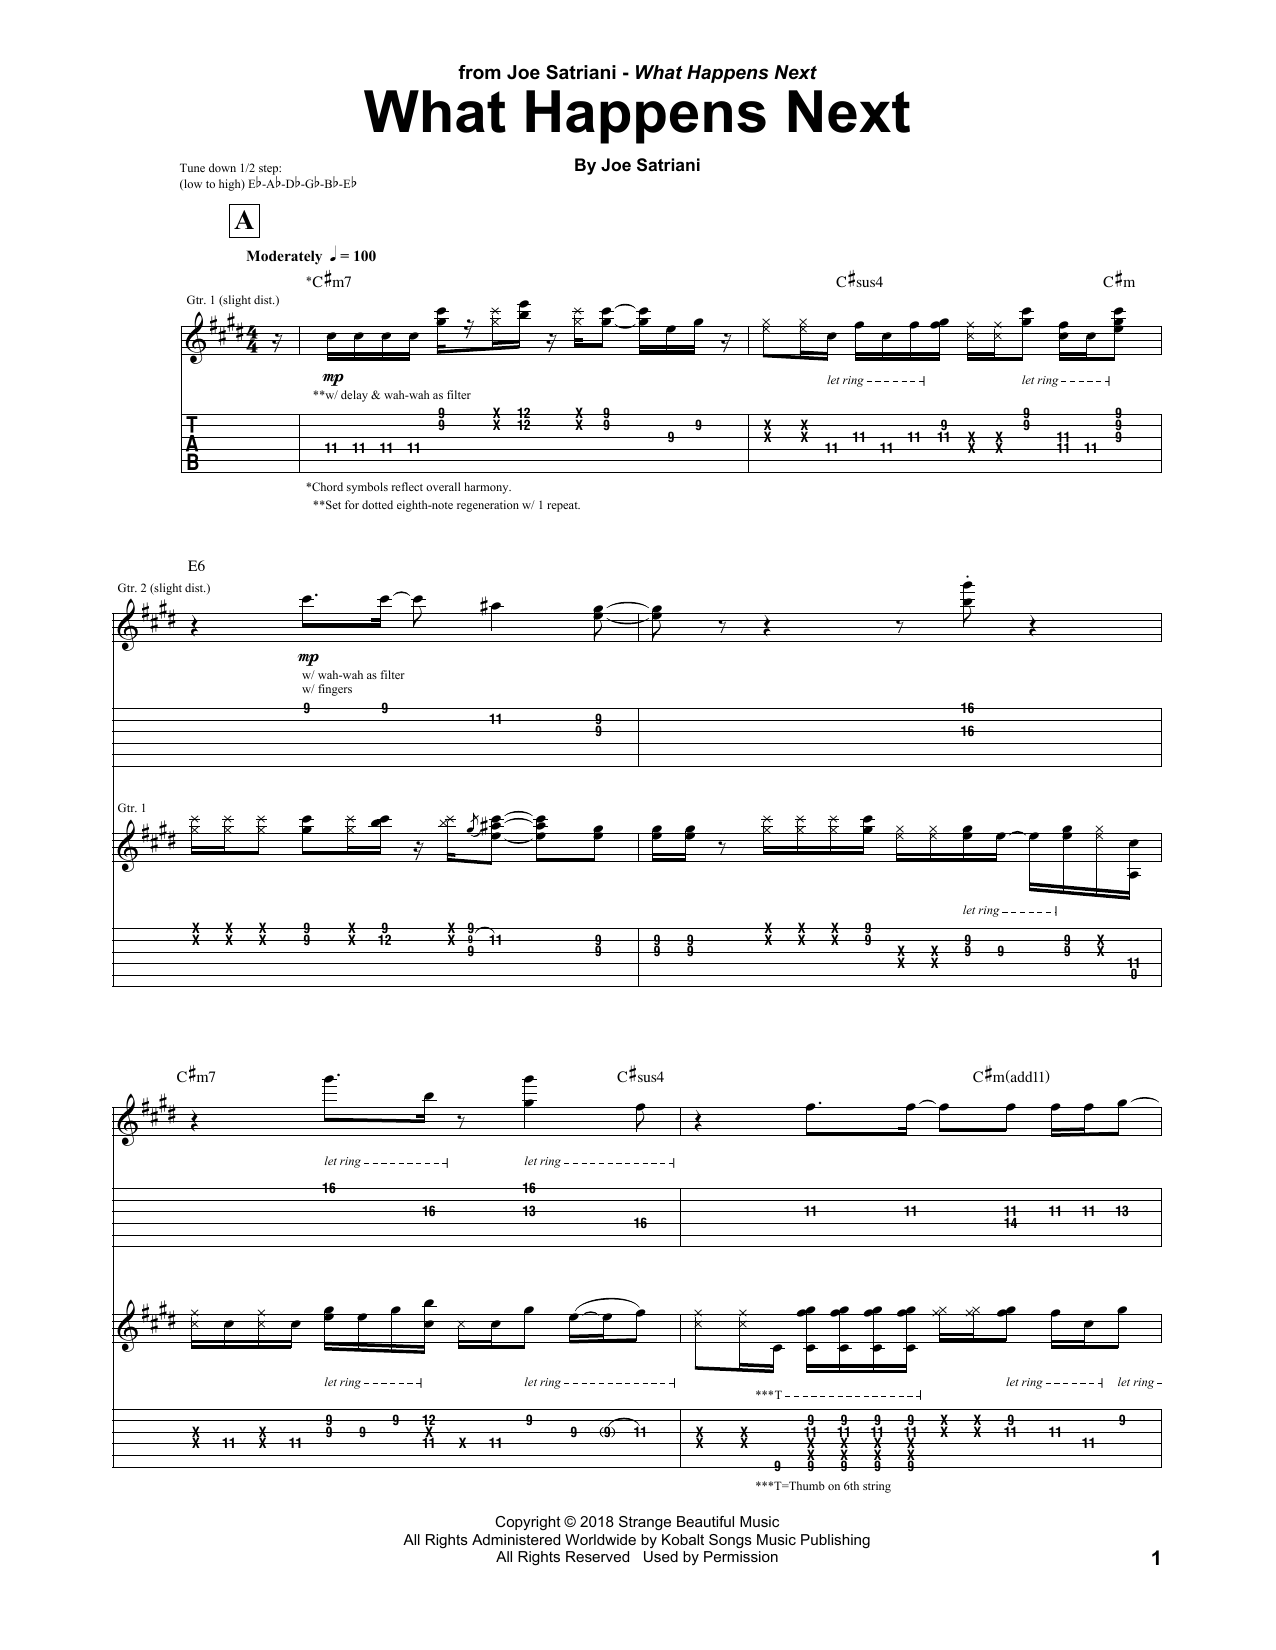 Joe Satriani What Happens Next Sheet Music Notes & Chords for Guitar Tab - Download or Print PDF